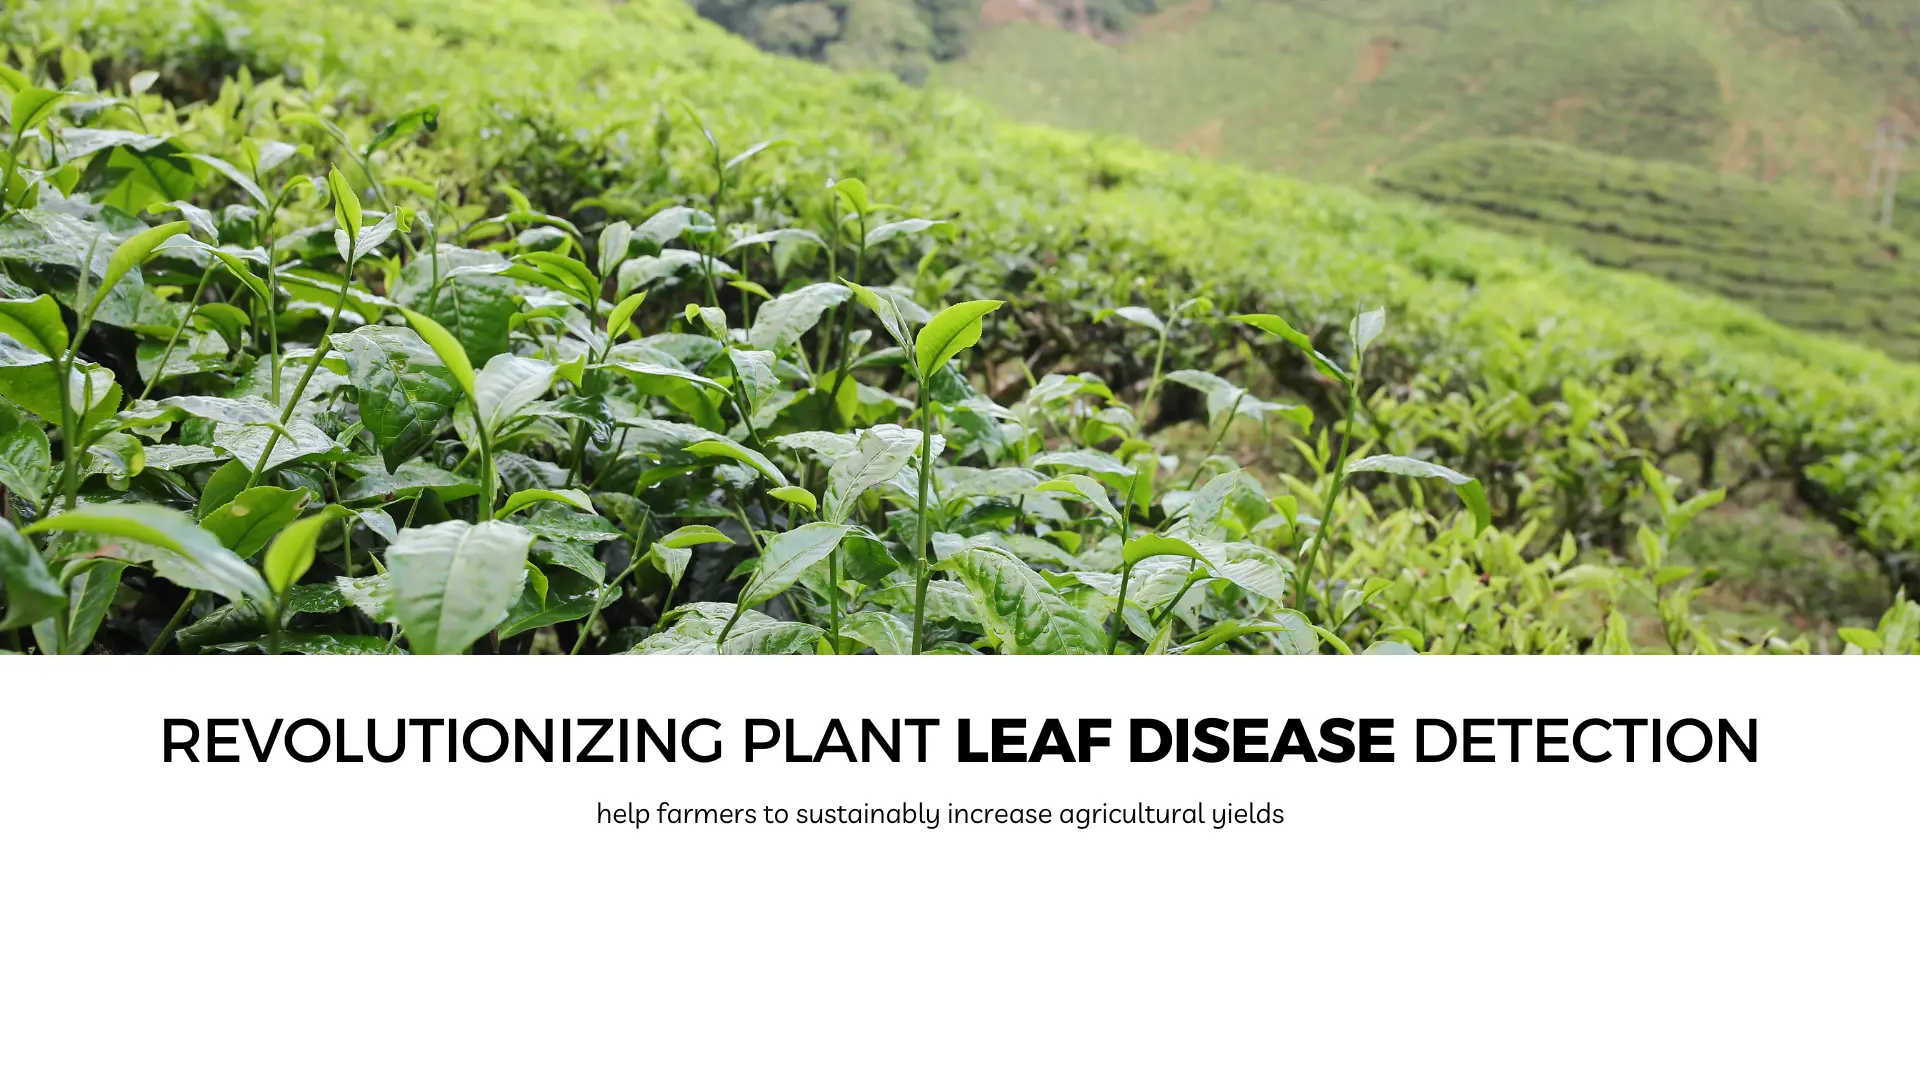 Revolutionizing plant leaf disease detection